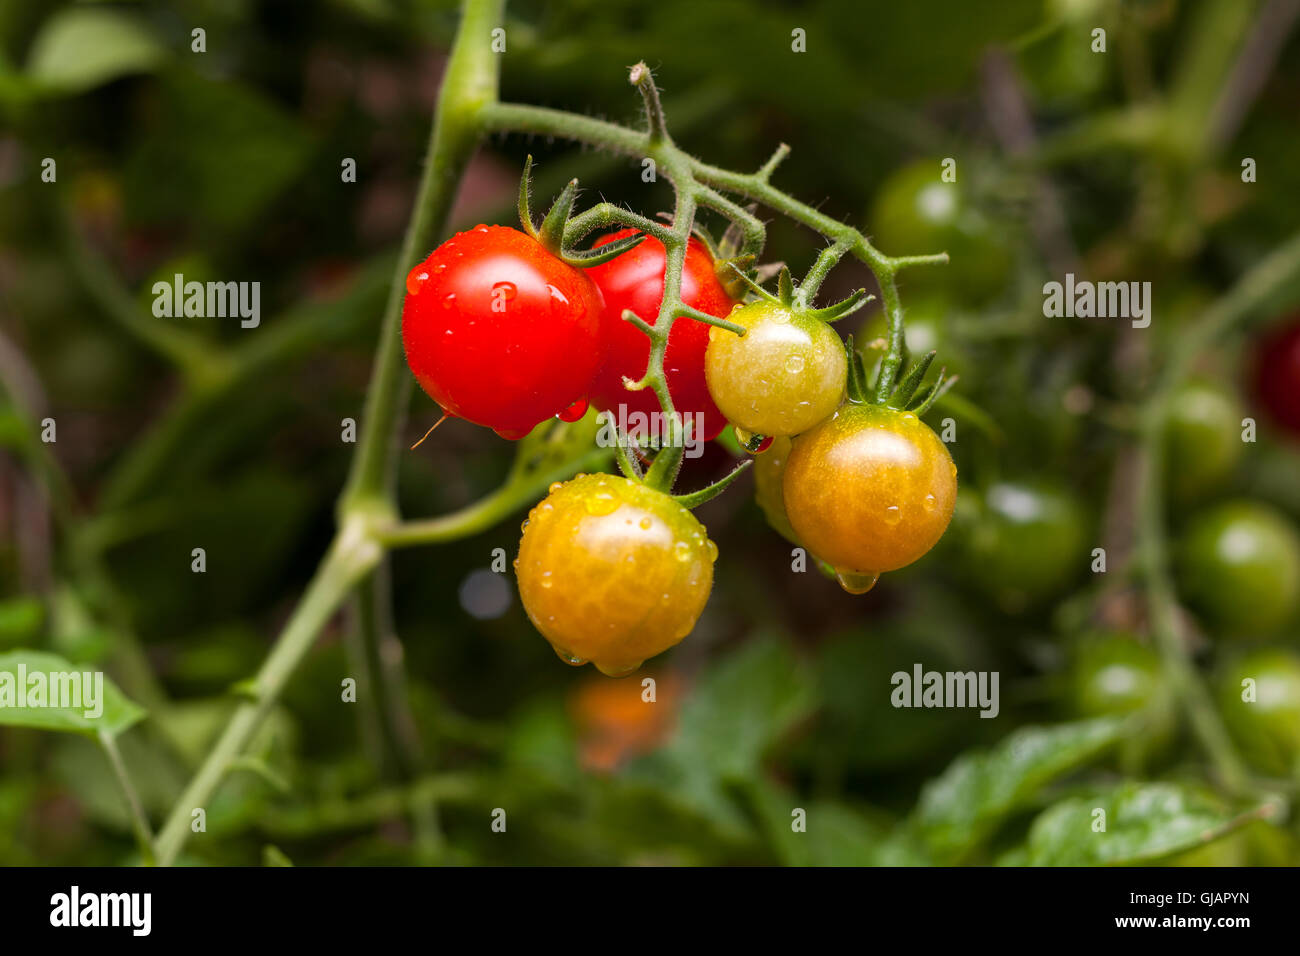 Cherry tomatoes on the vine Stock Photo